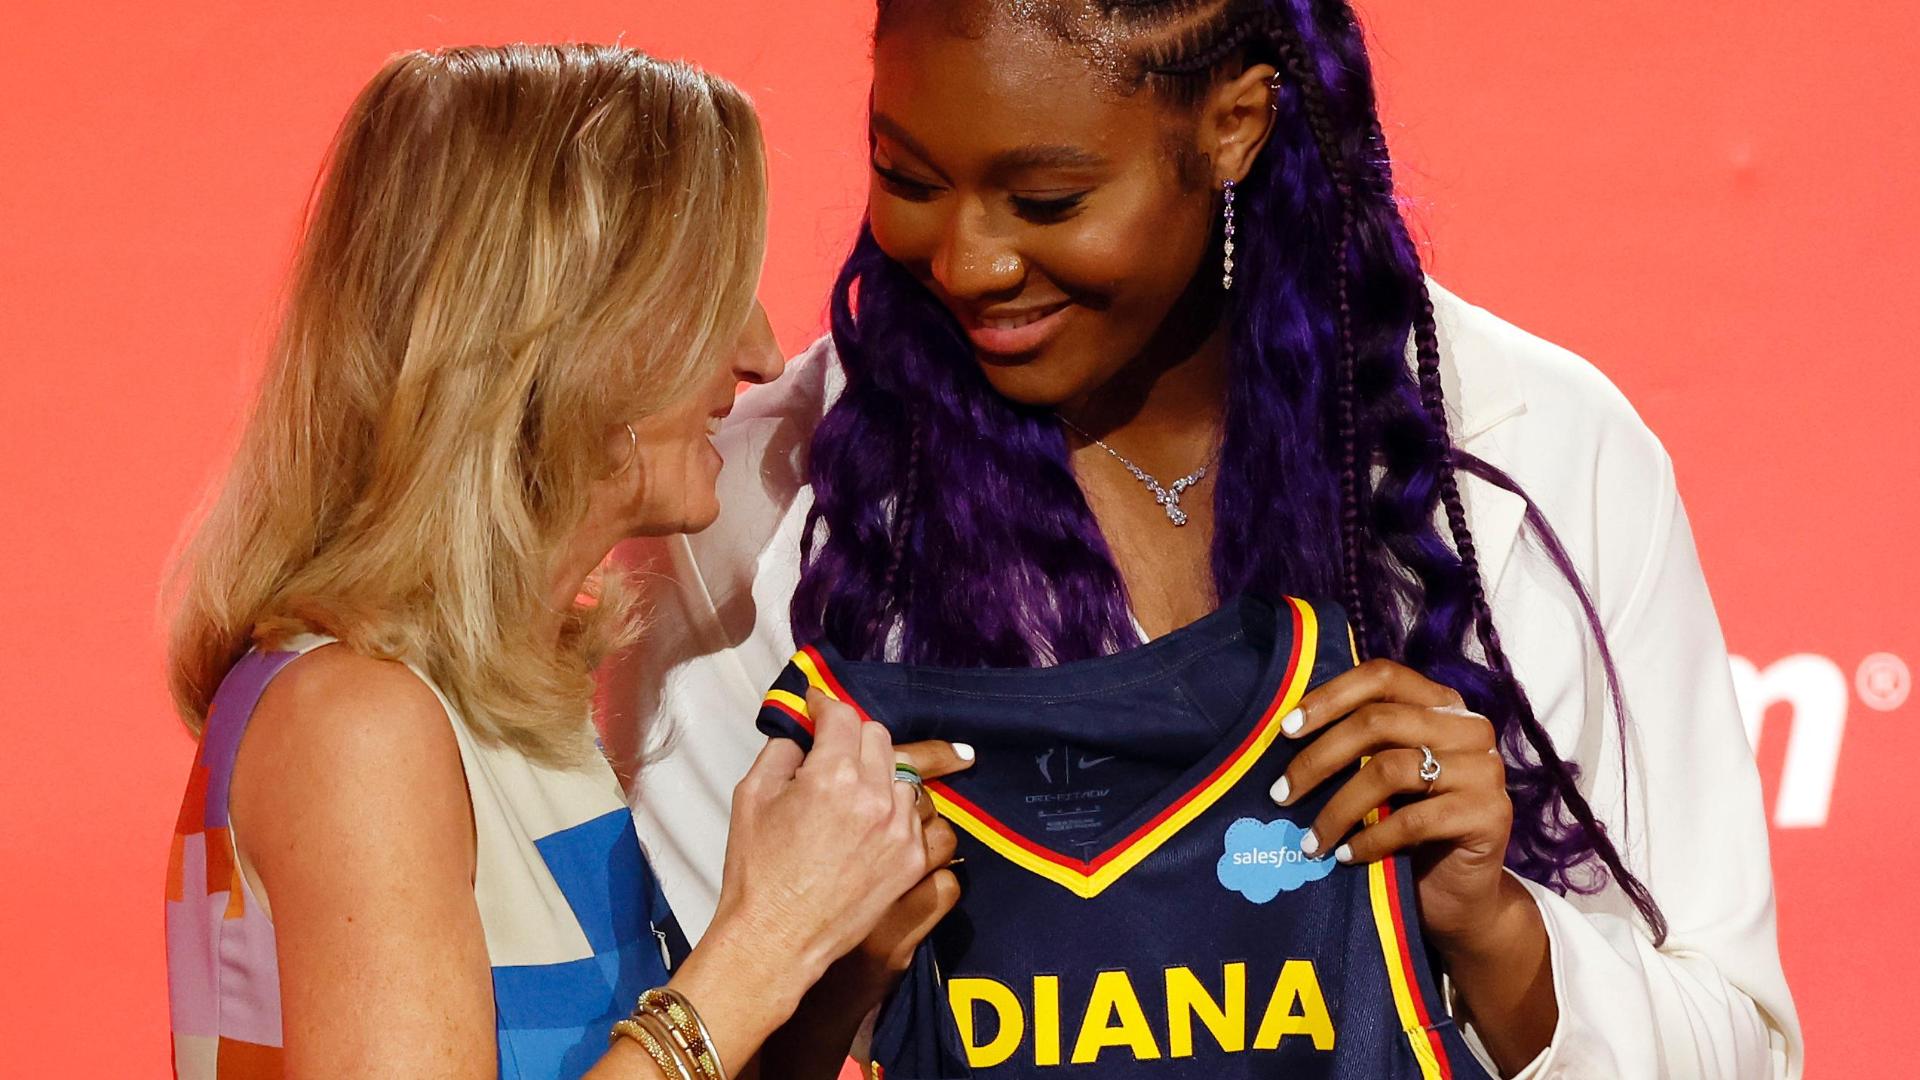 USC's Kadi Sissoko Earns Spot on WNBA Roster With Phoenix Mercury